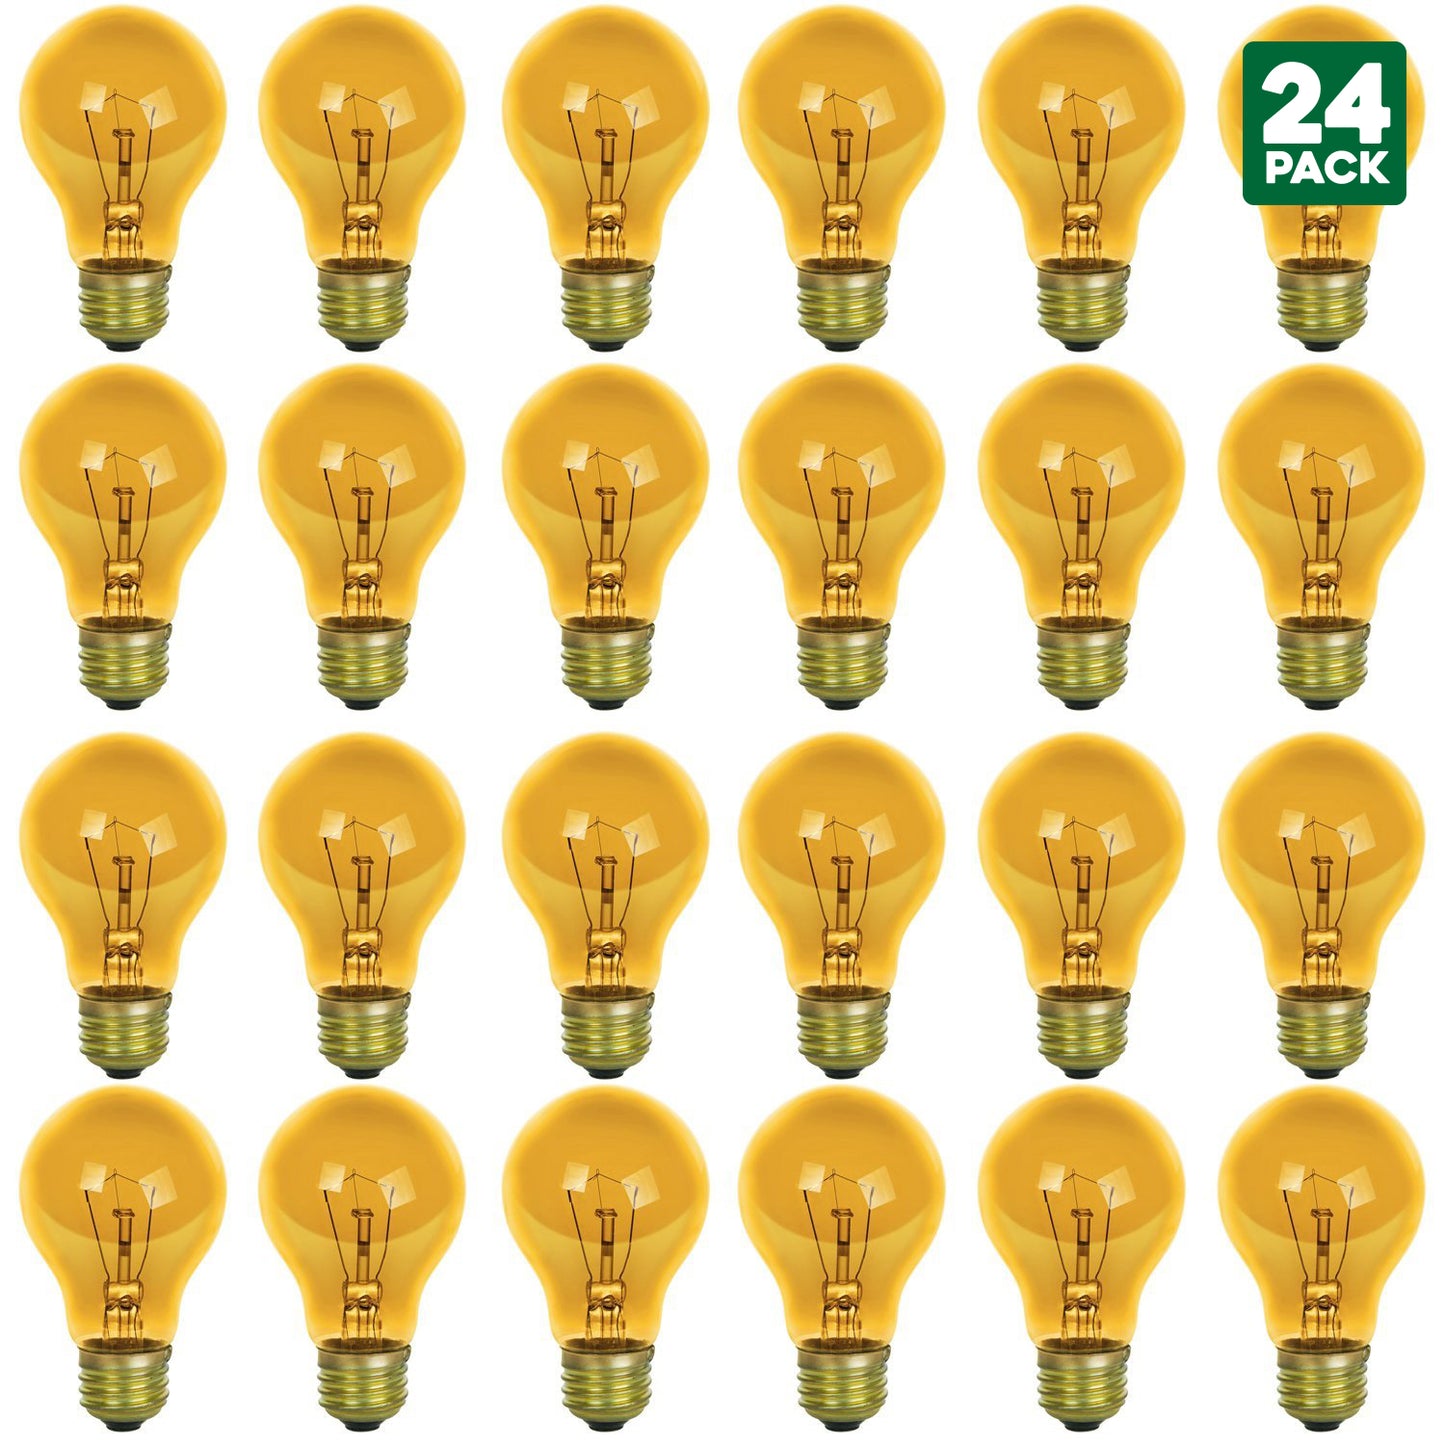 2 Pack of Sunlite 25 Watt A19 Colored, Medium Base Bulbs